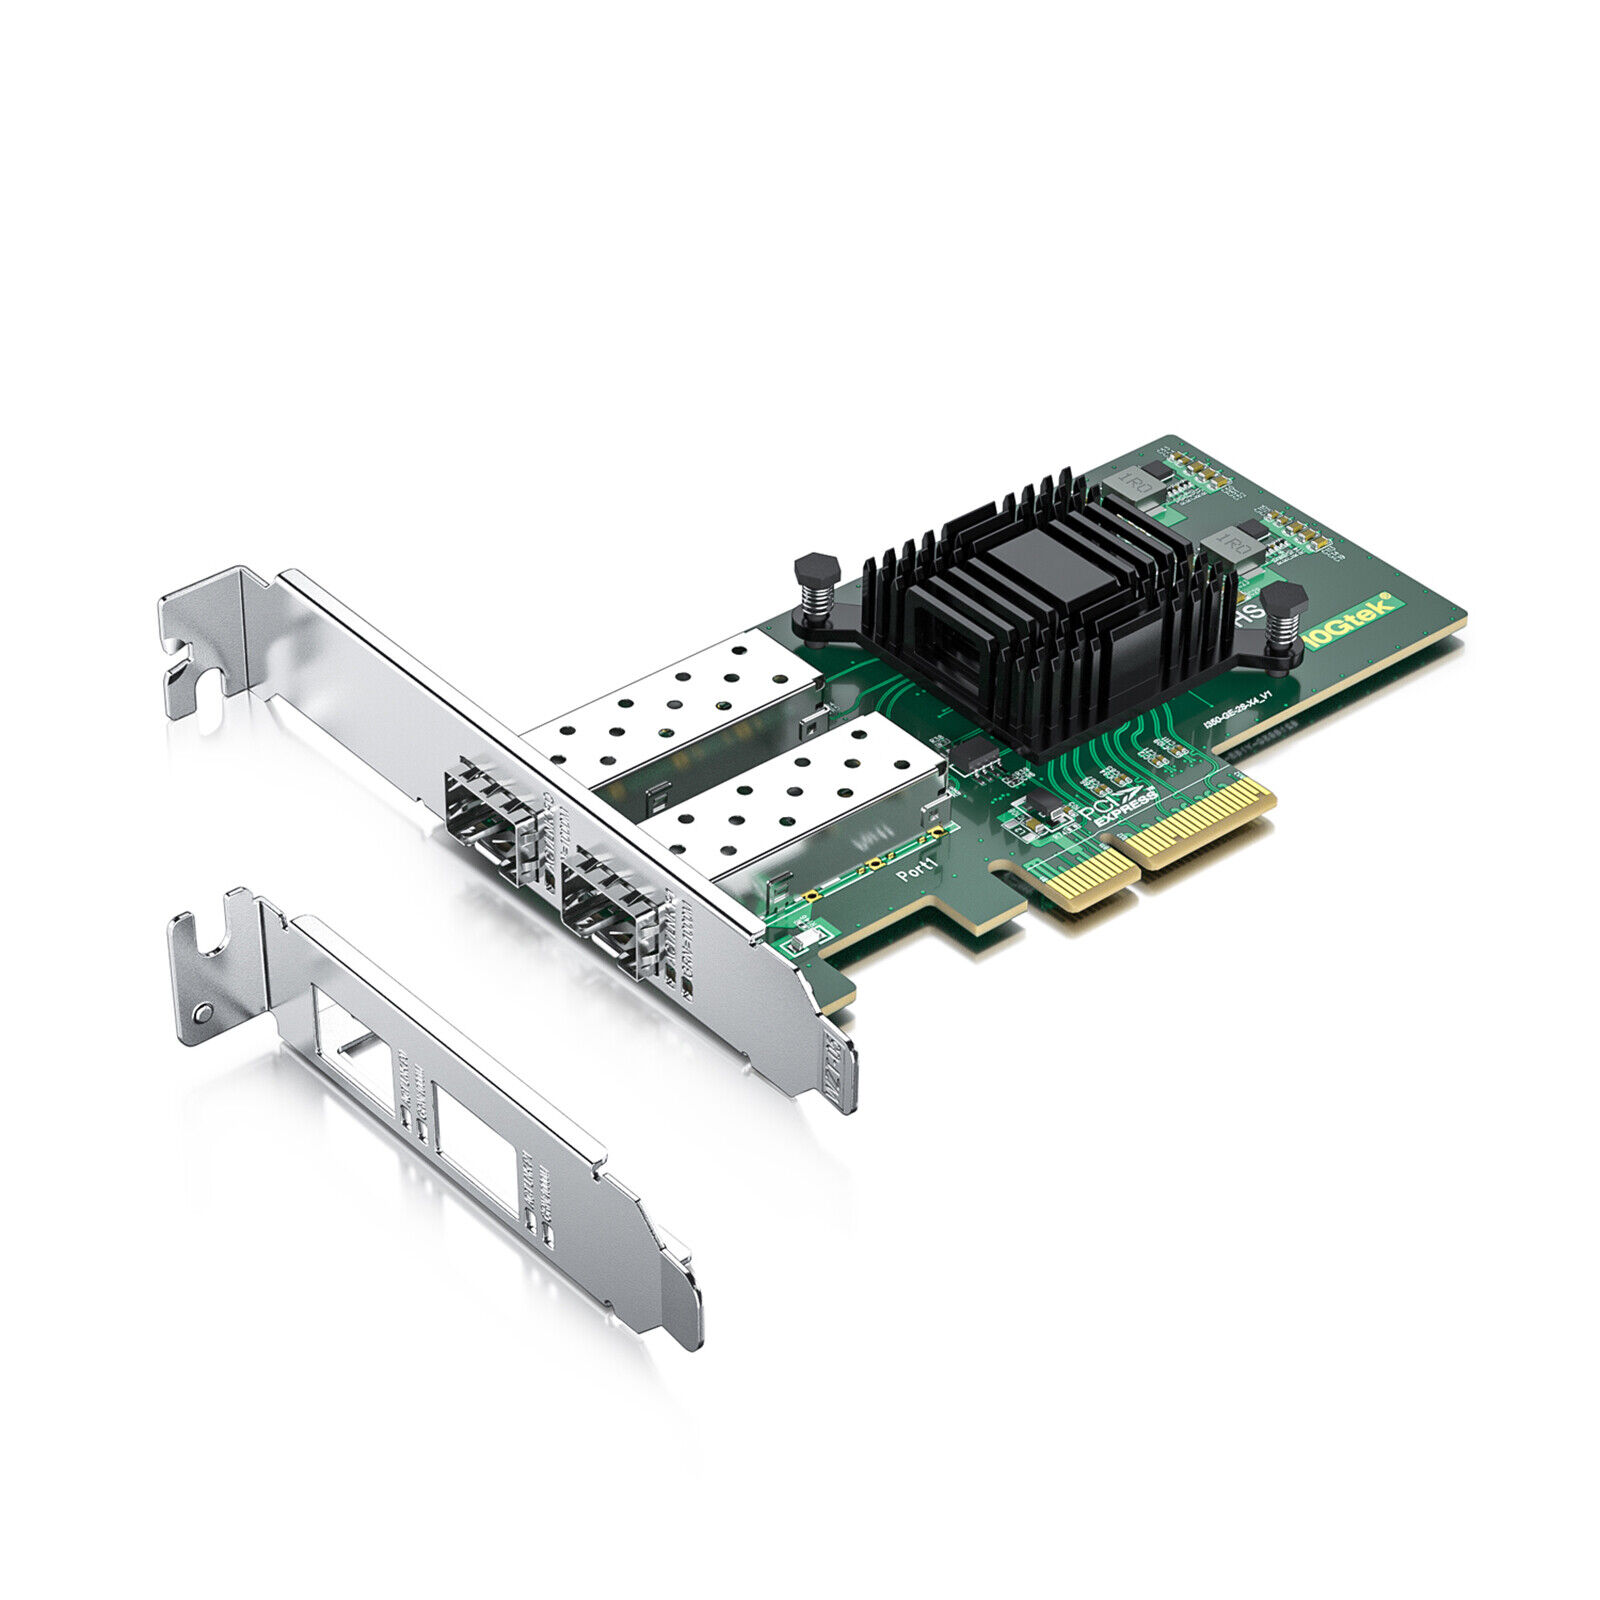 For Intel I350-F2 Gigabit Network Card with Intel I350AM2 Dual SFP ports PCIe x4